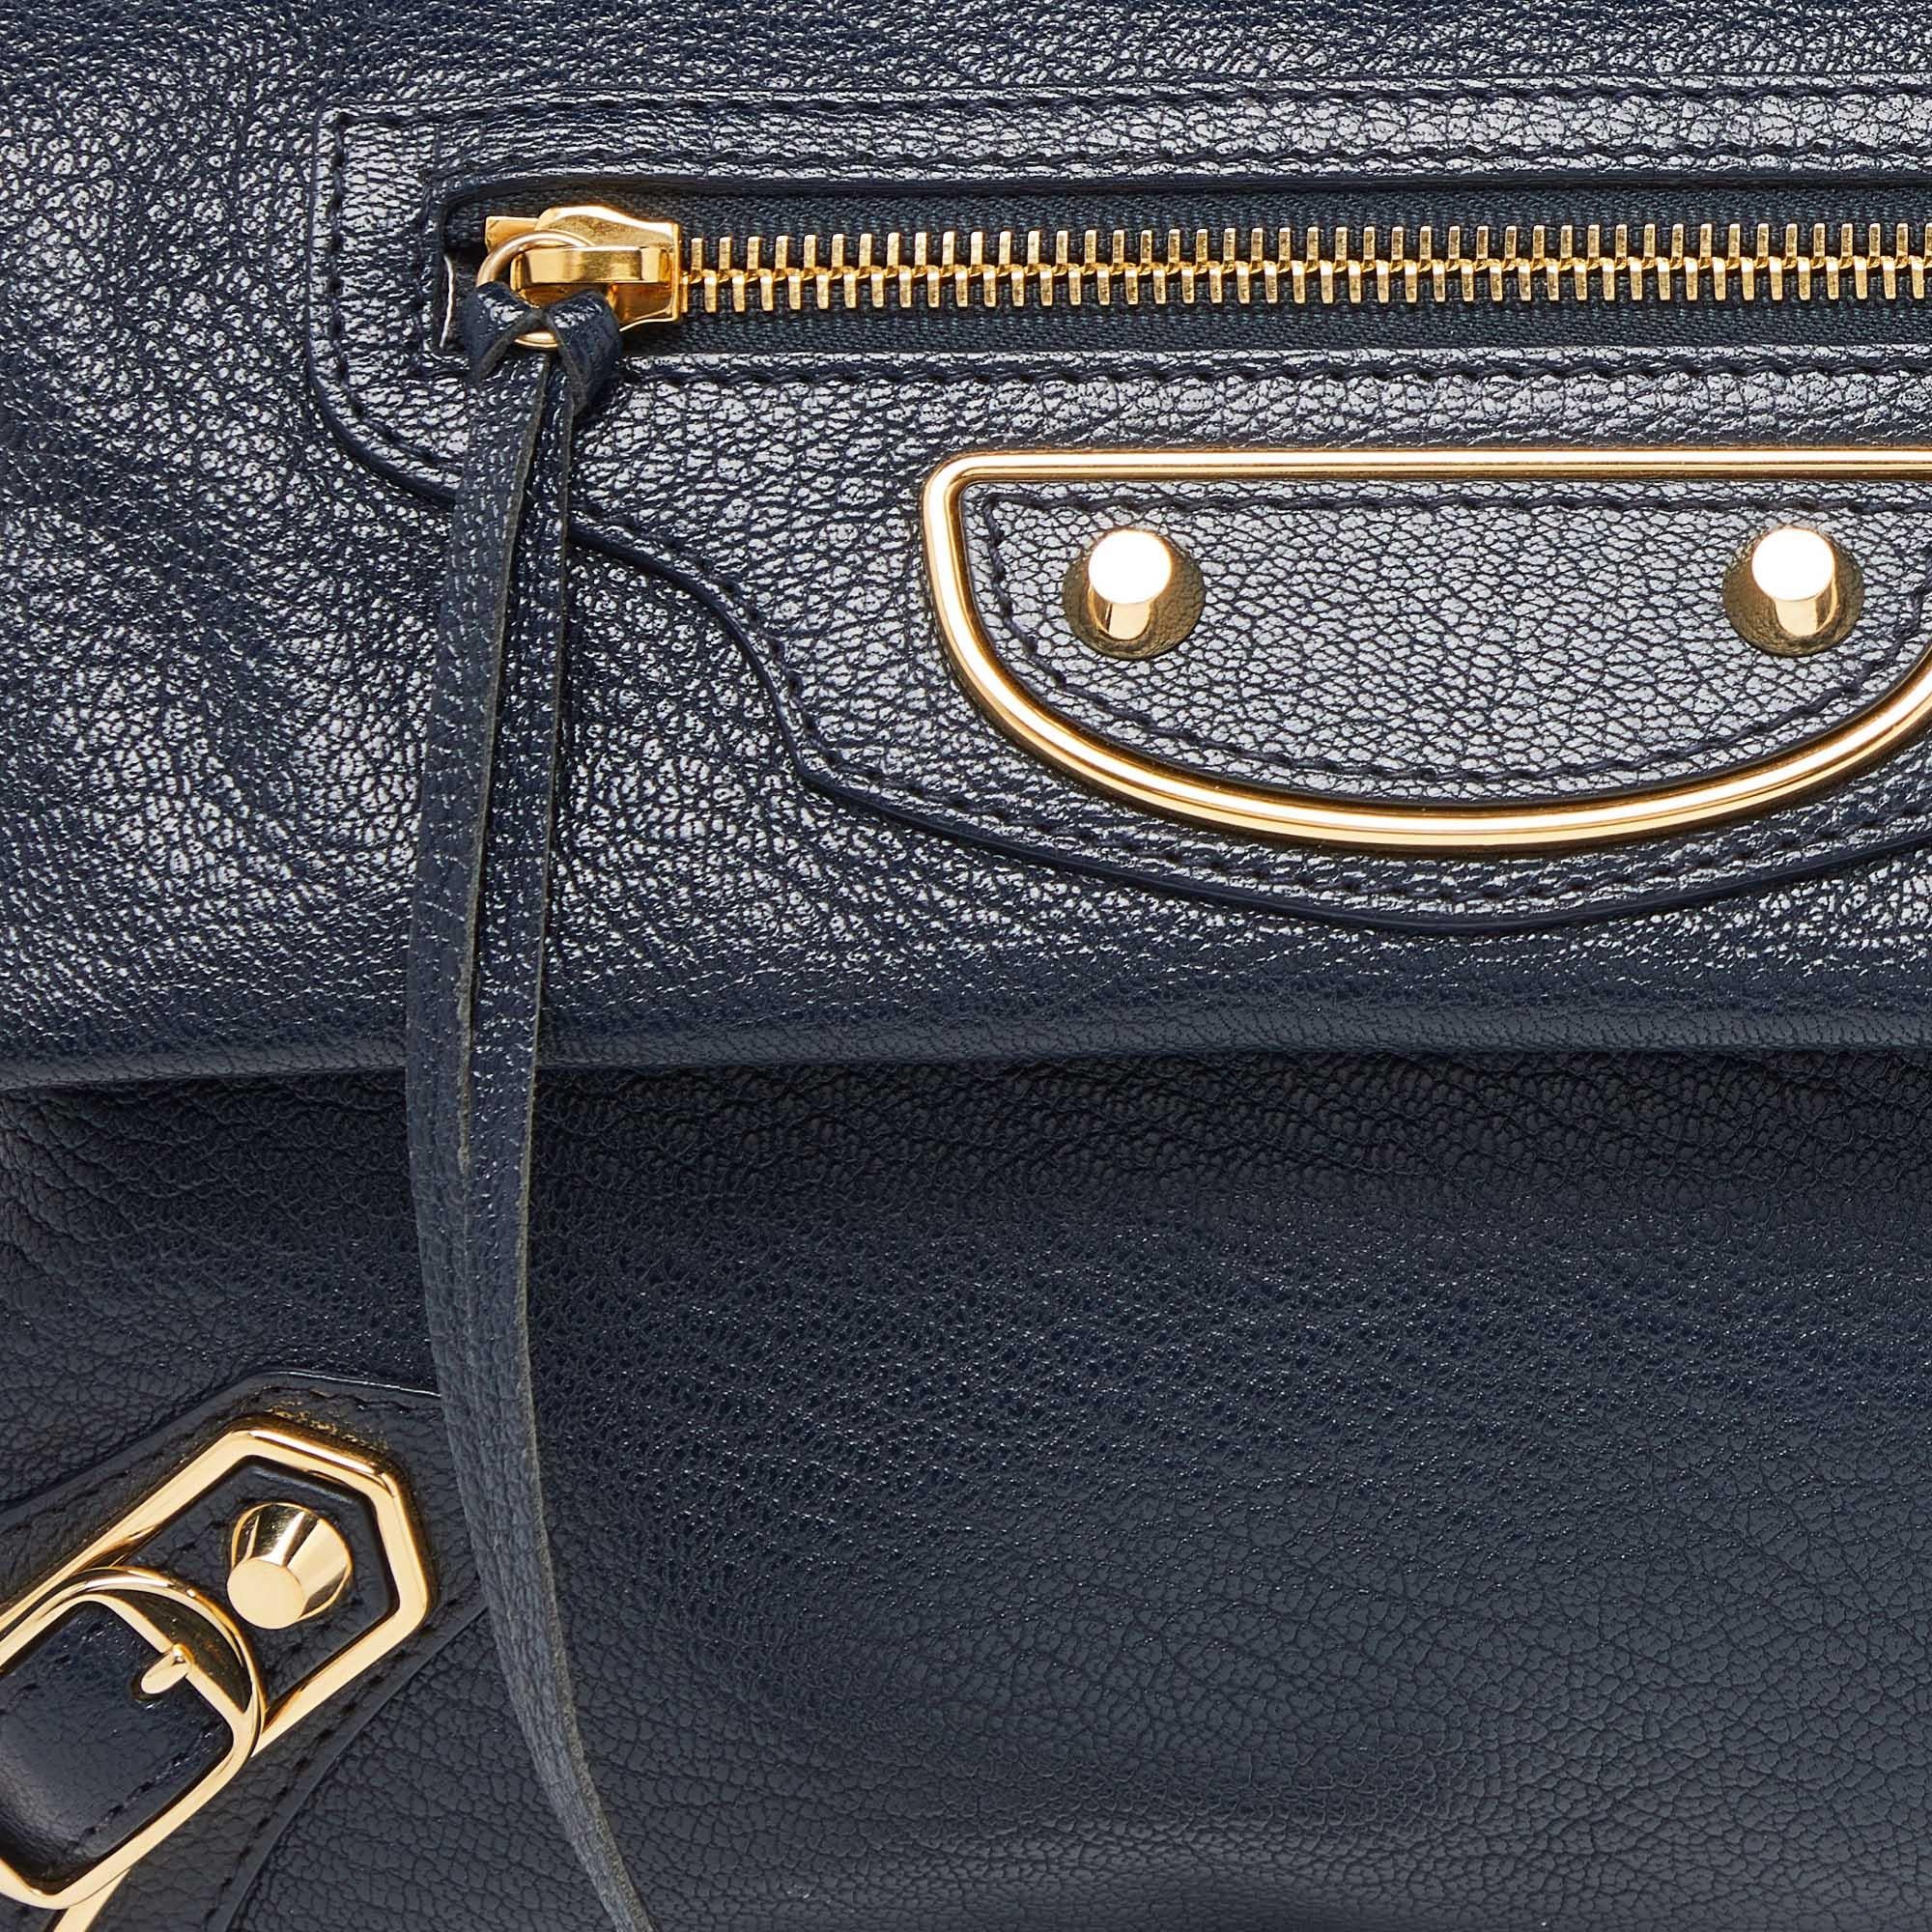 Balenciaga Navy Blue Leather Metallic Edge Envelope Clutch Bag 7